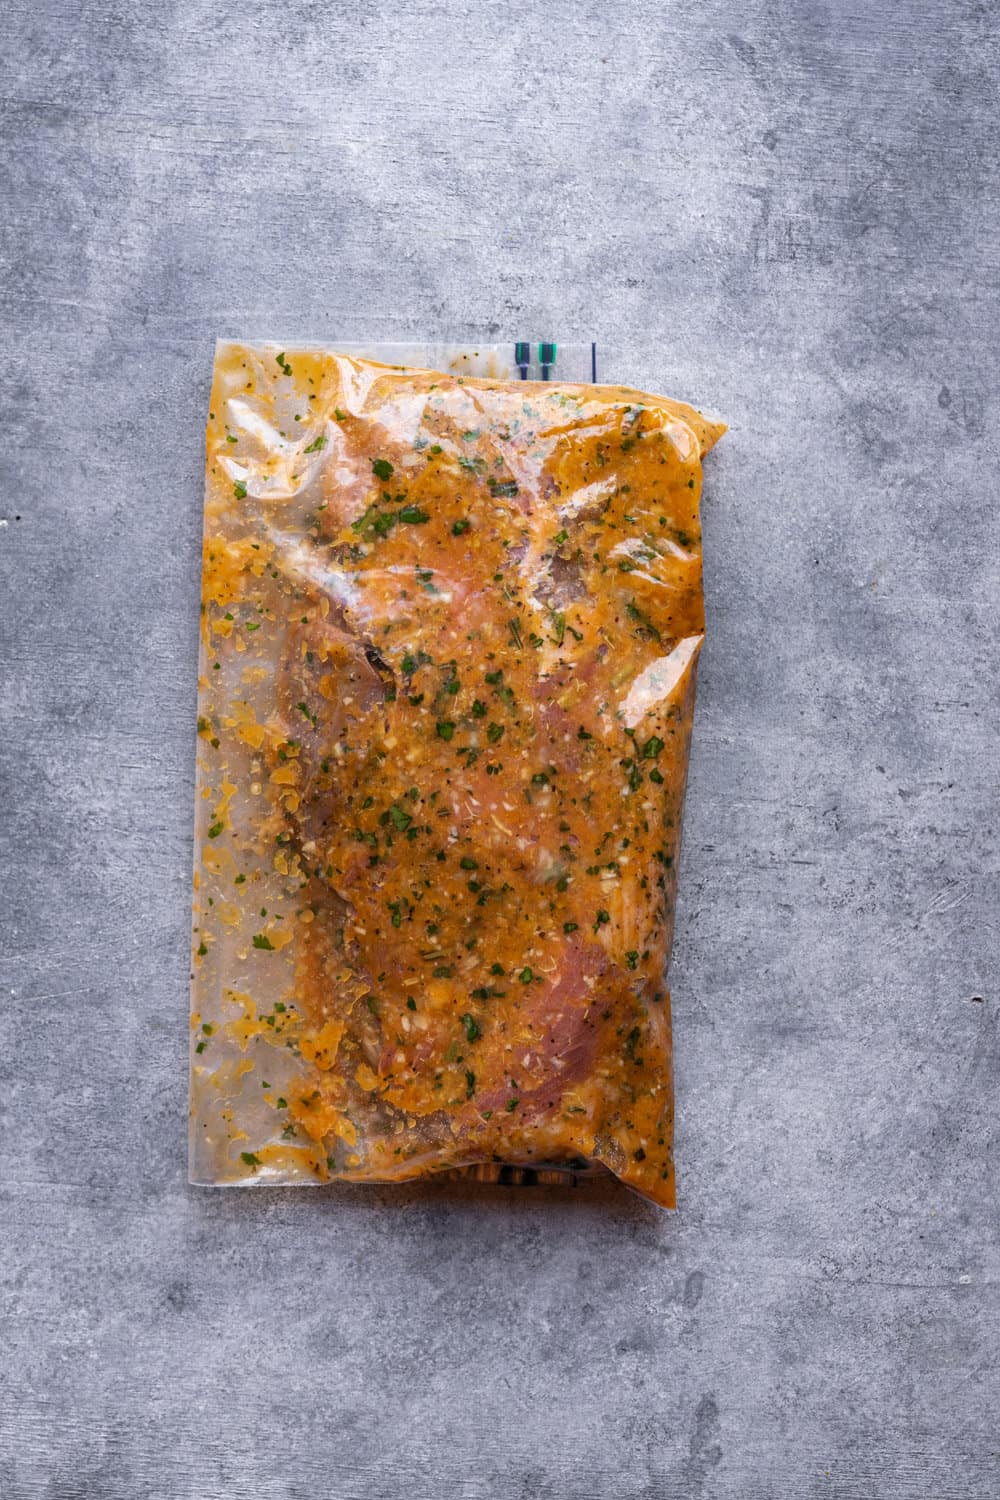 Steak and marinade in a sealed ziploc bag.